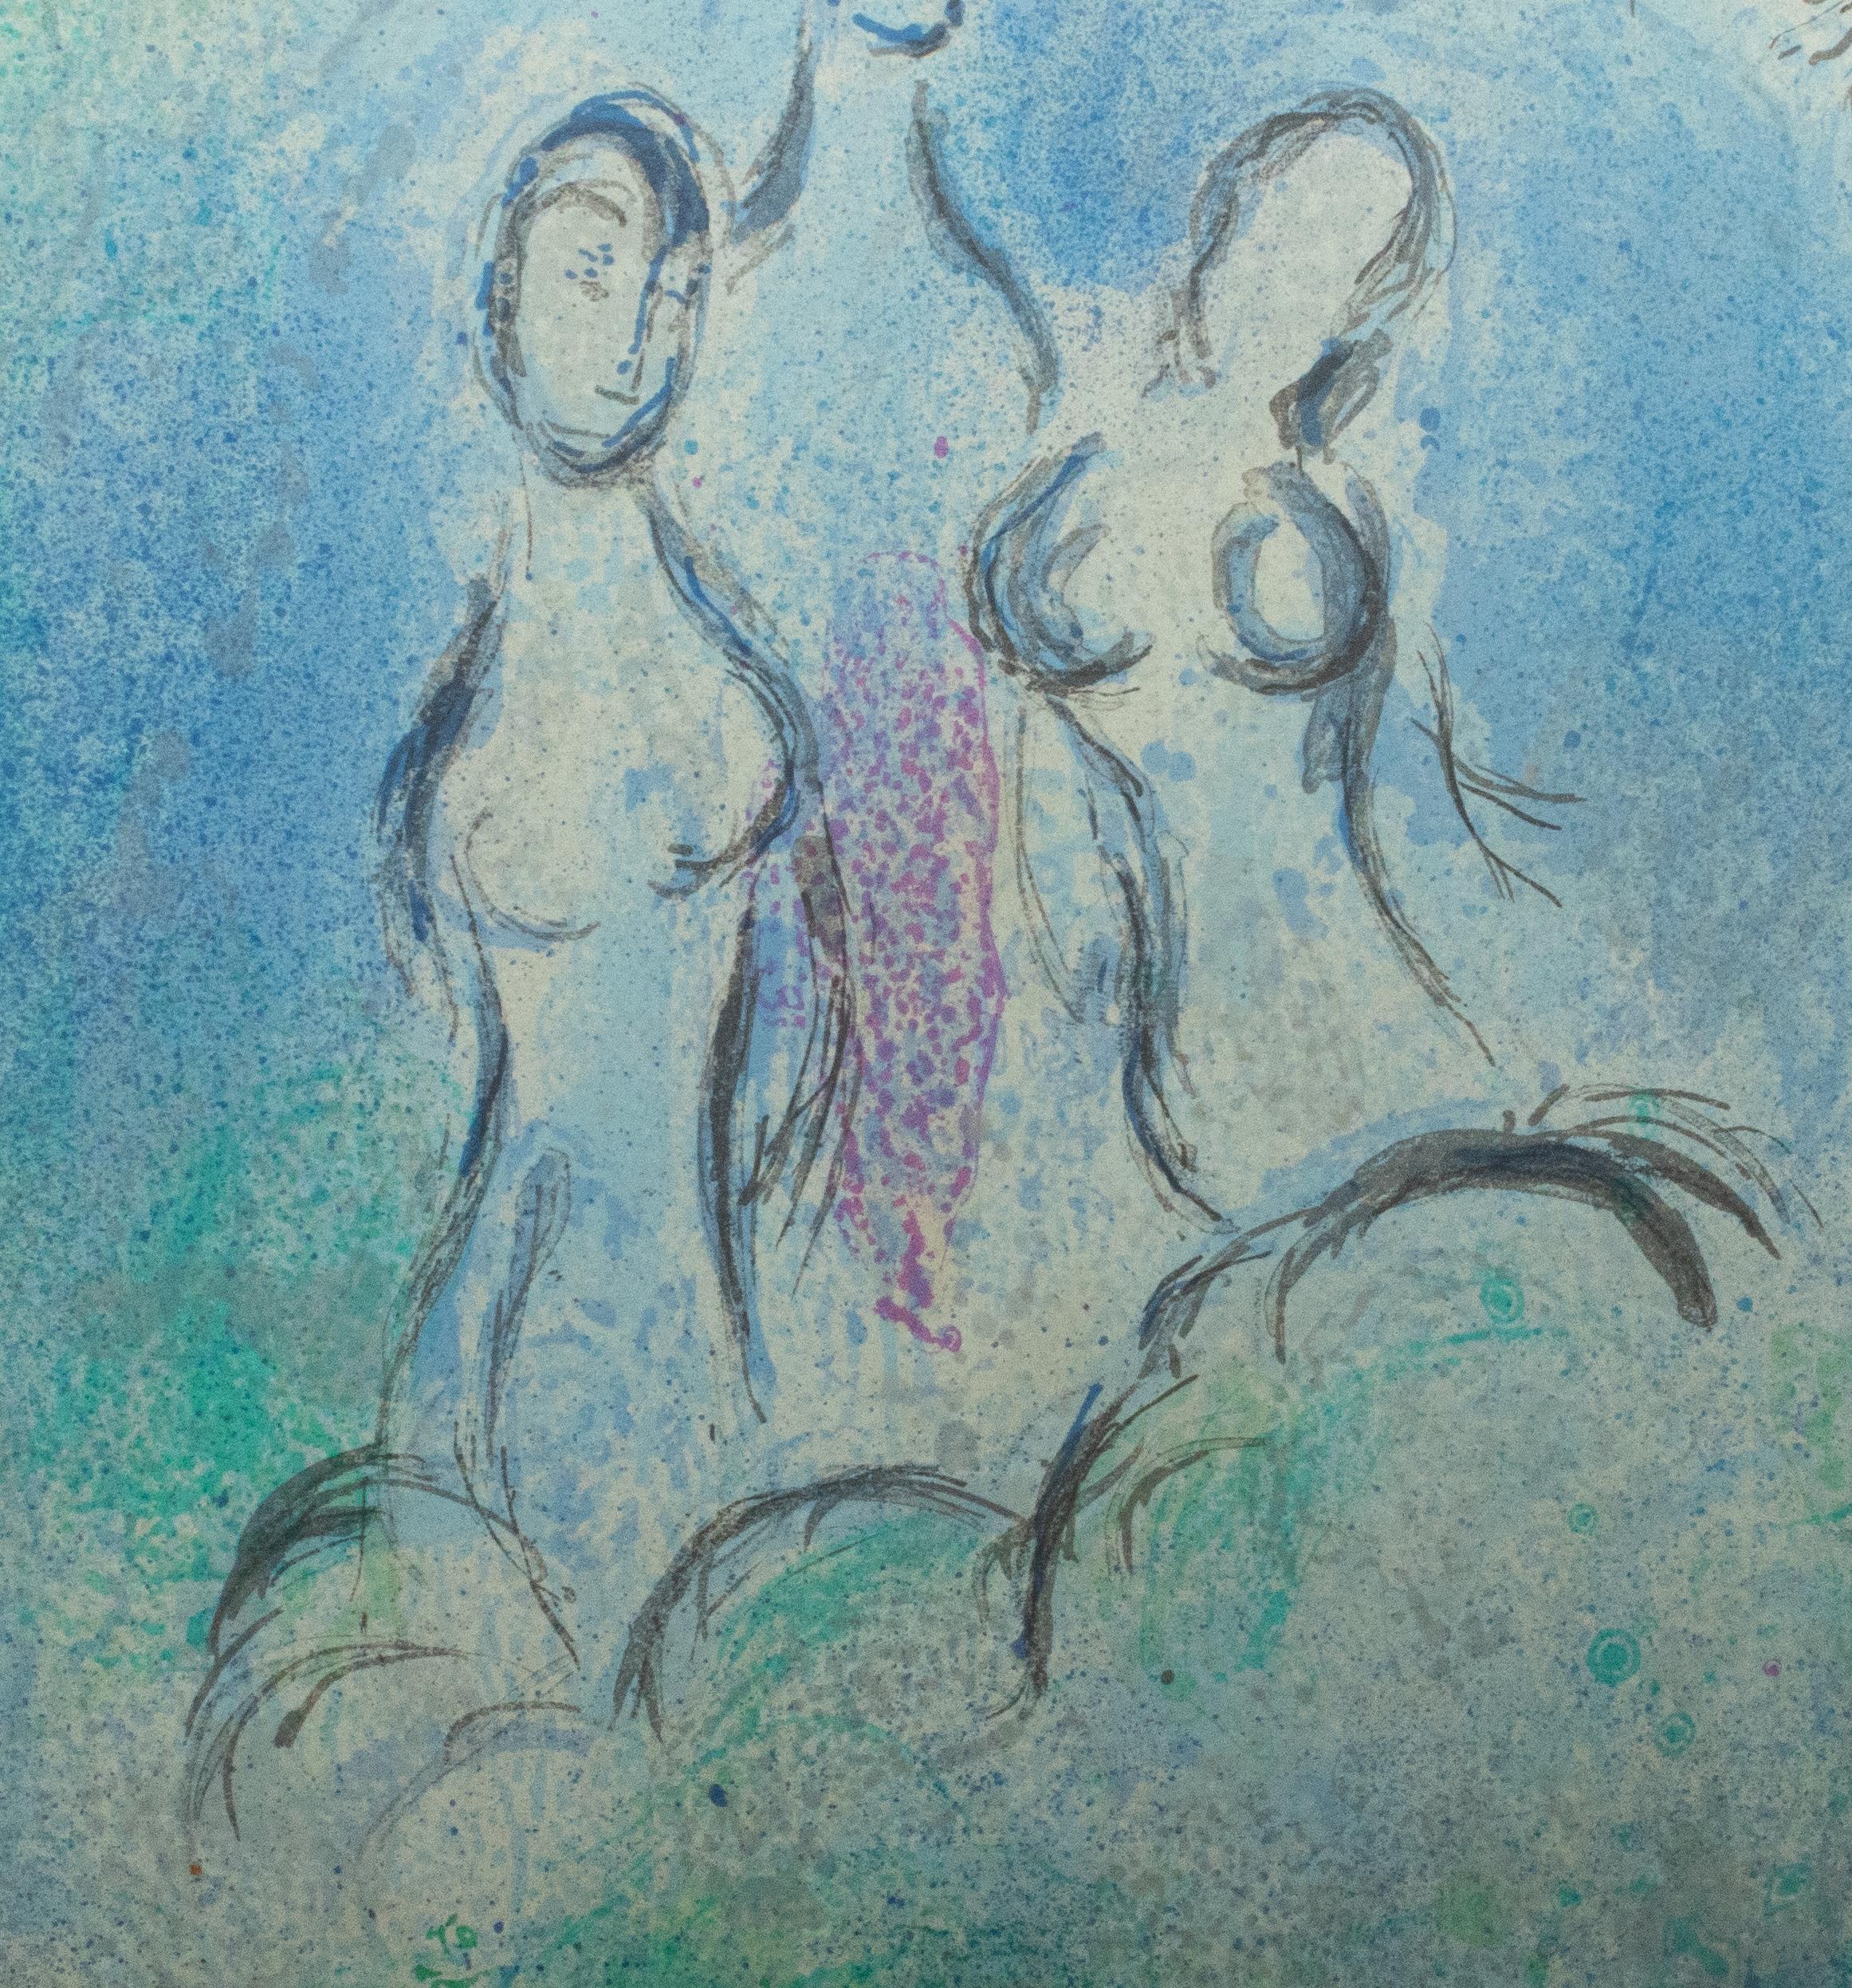 Marc Chagall (1887-1985) 